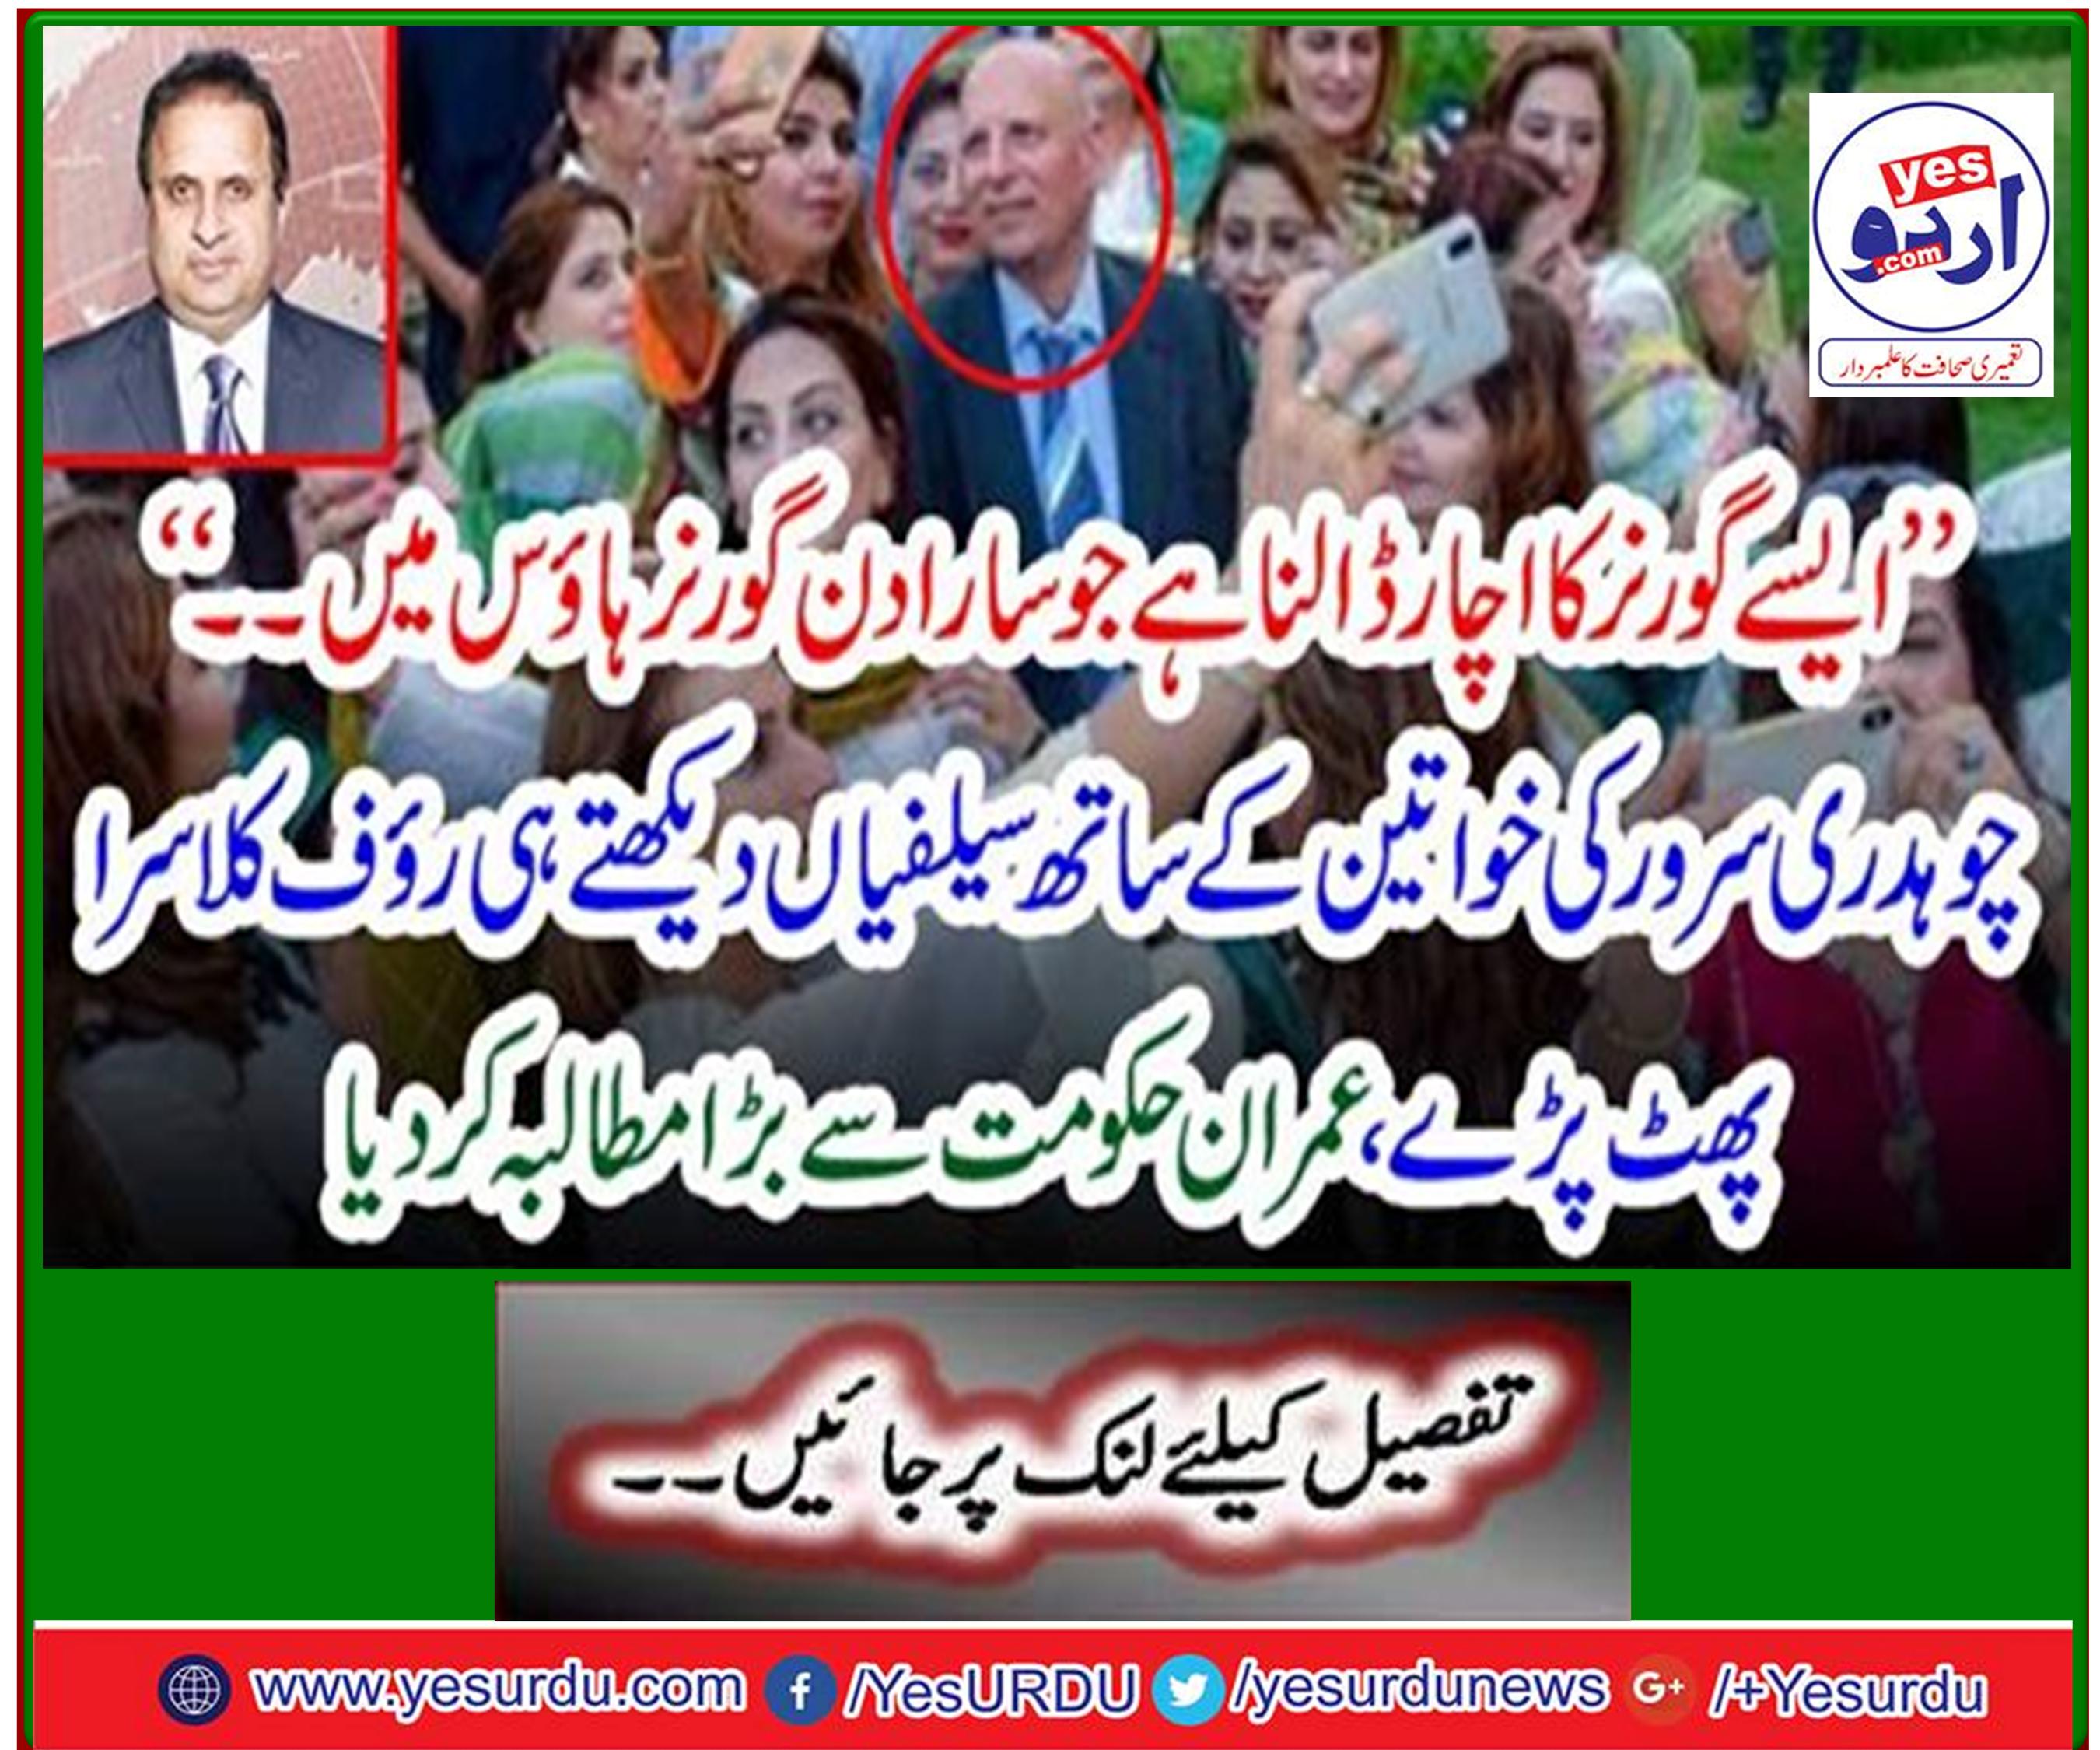 Rauf Klasra burst after seeing Chaudhry Sarwar's selfies with women: Imran demands huge government